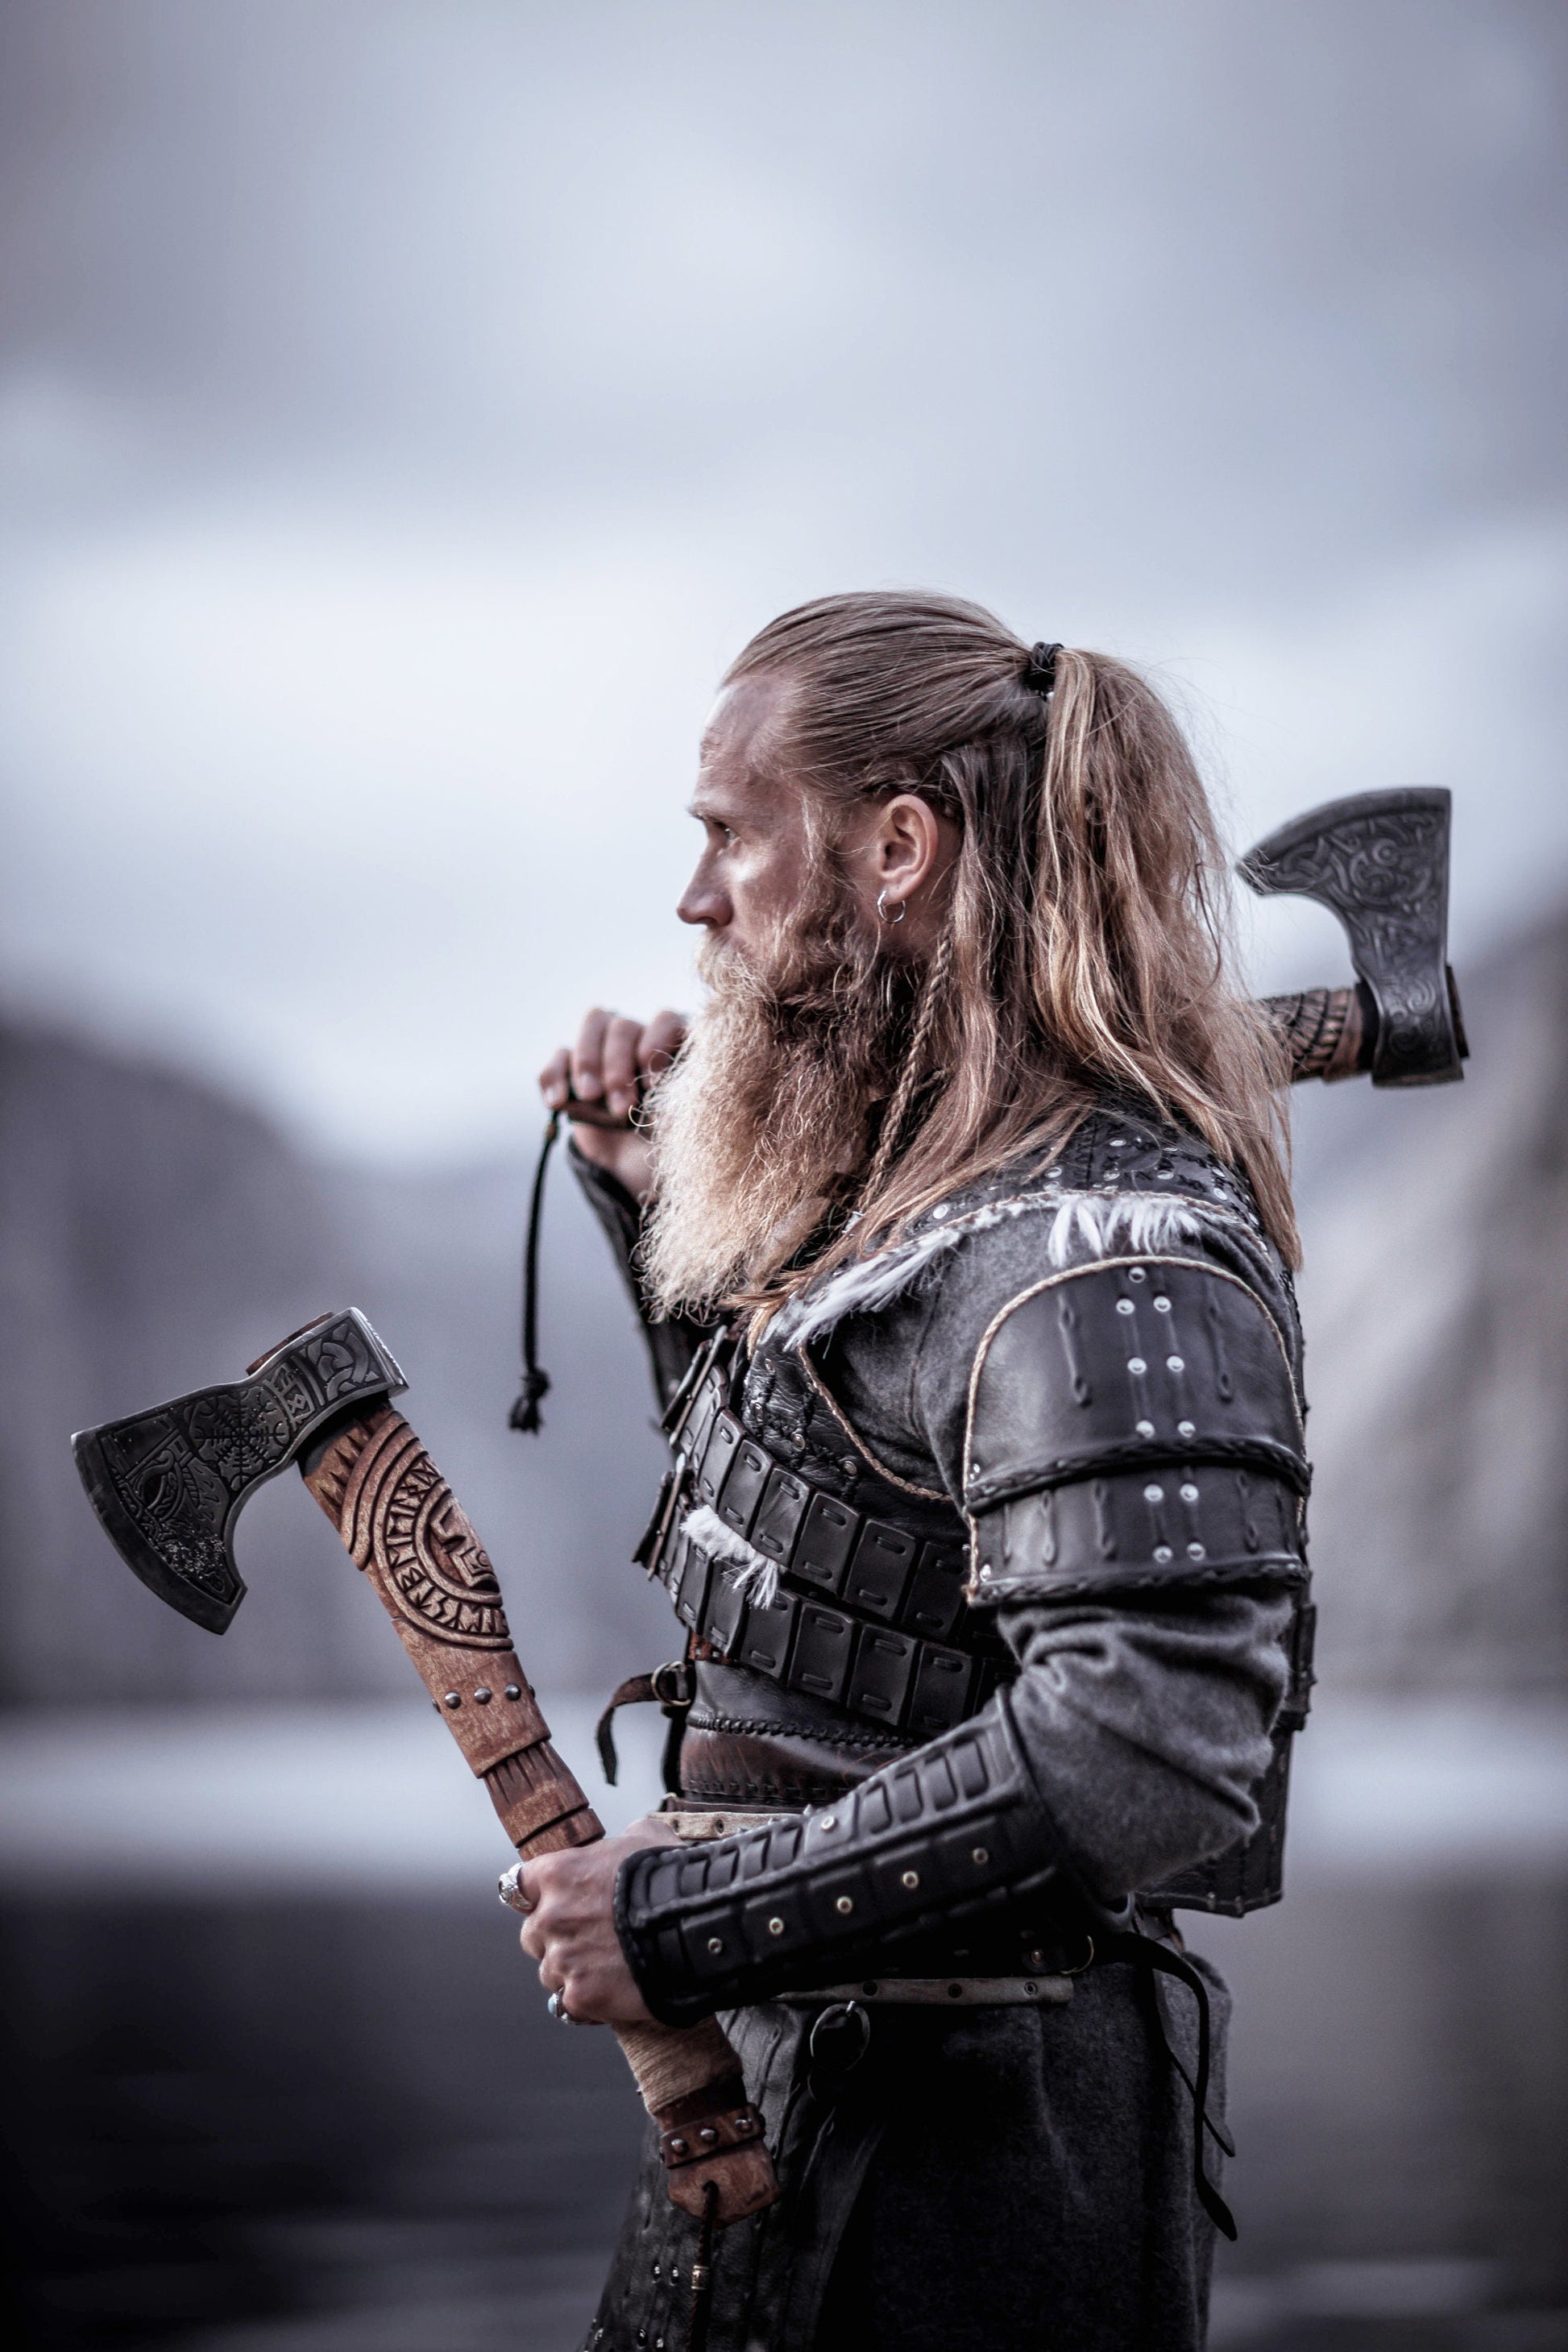 Who Was Viking Warrior Ivar the Boneless?